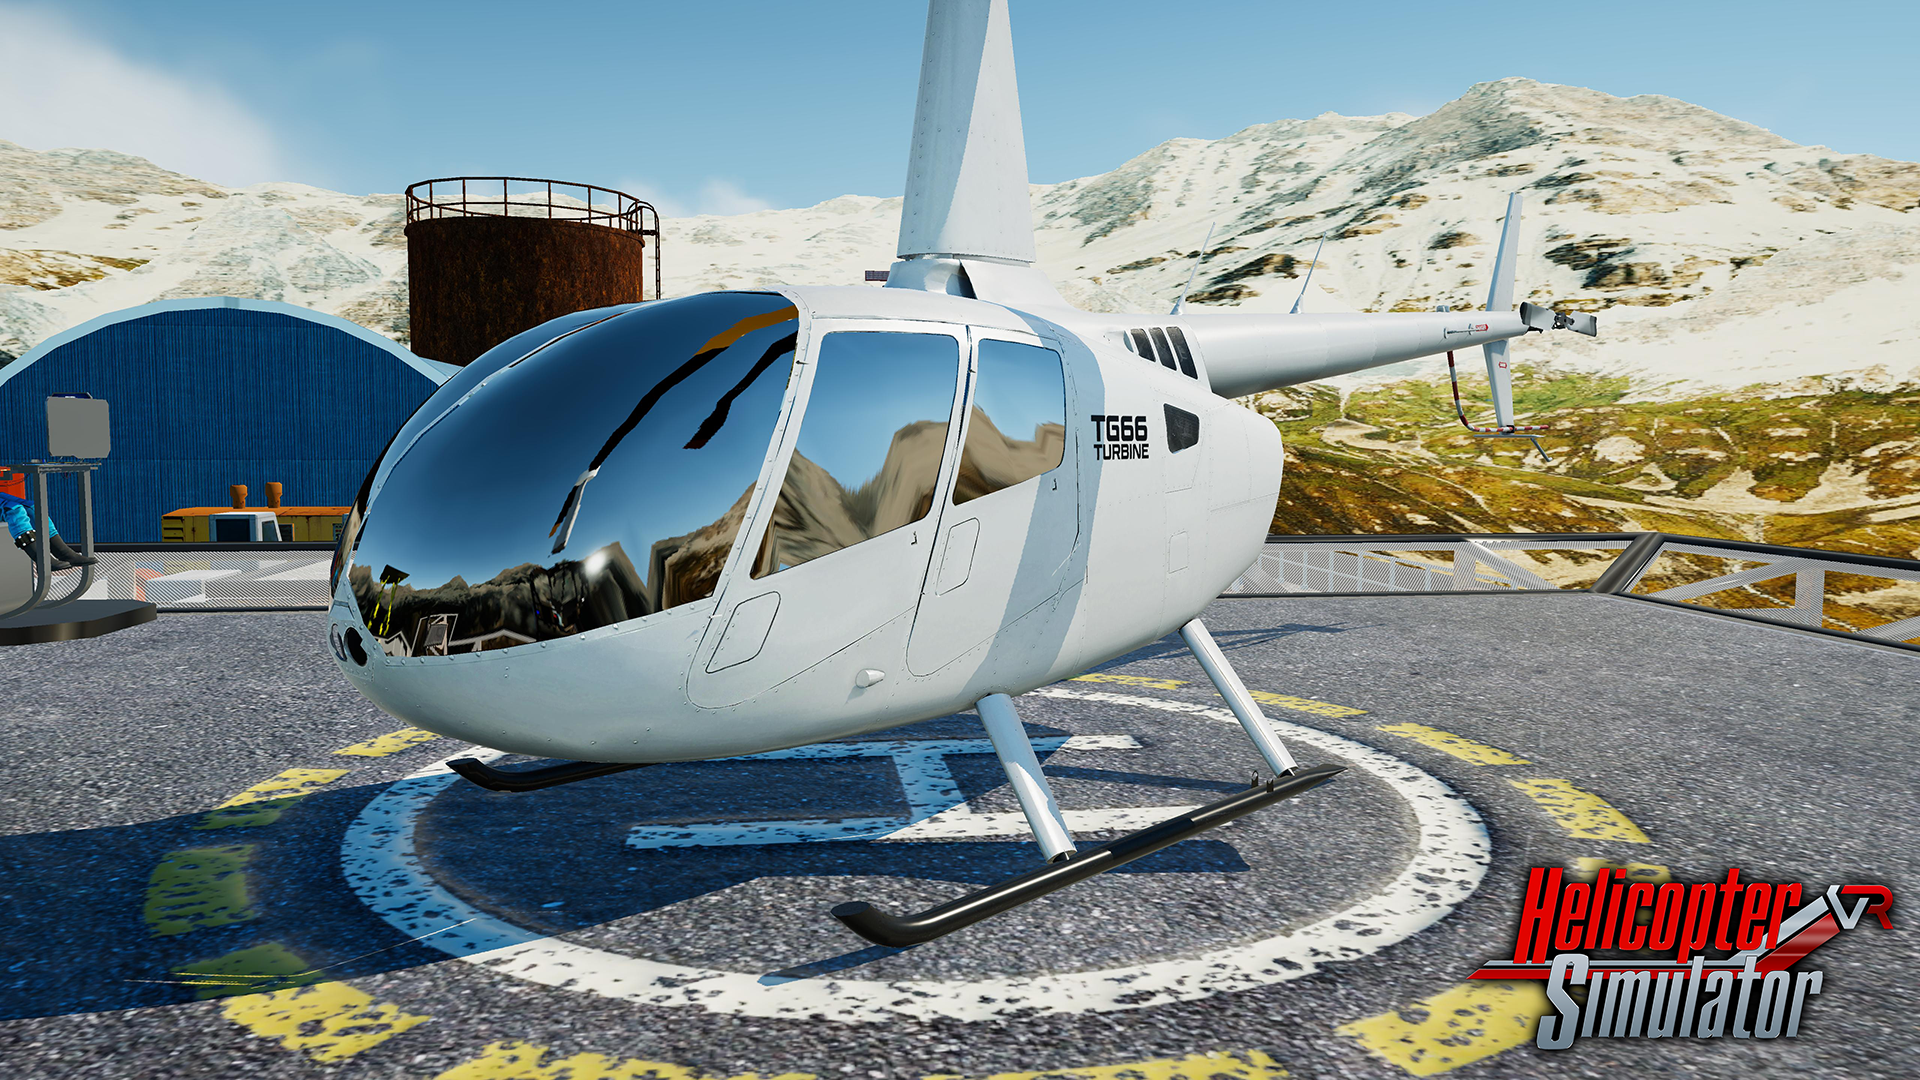 Screenshot 1 of simulador de helicóptero 2023 23.09.27